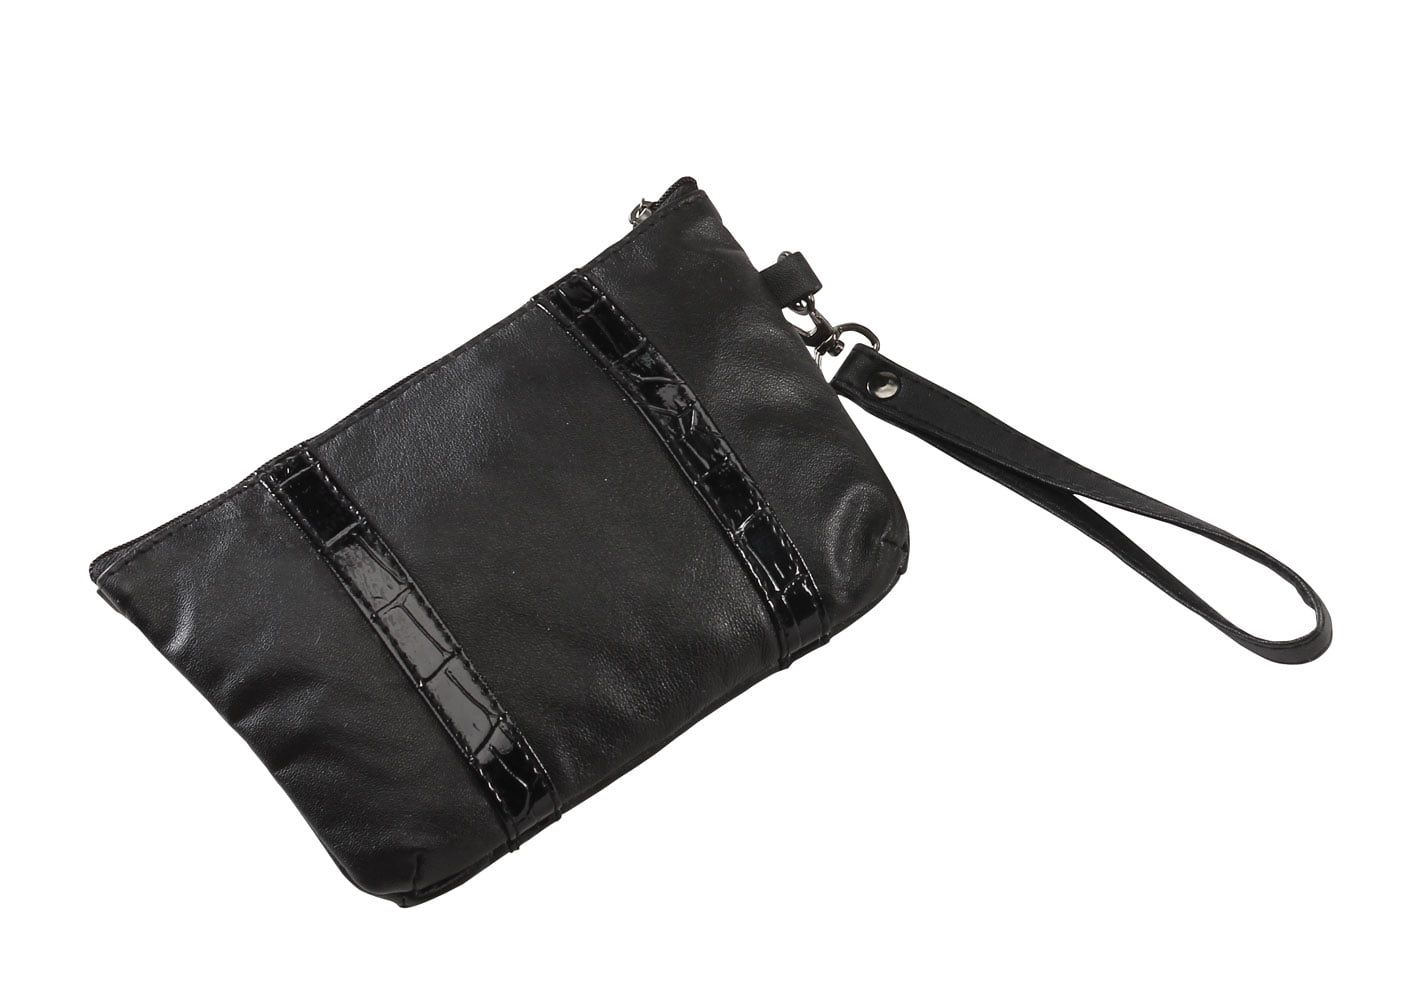 Details about   Unisex Multifunctional Wrist Band Zipper Wrap Sport Wrist Strap Wallet Storage 